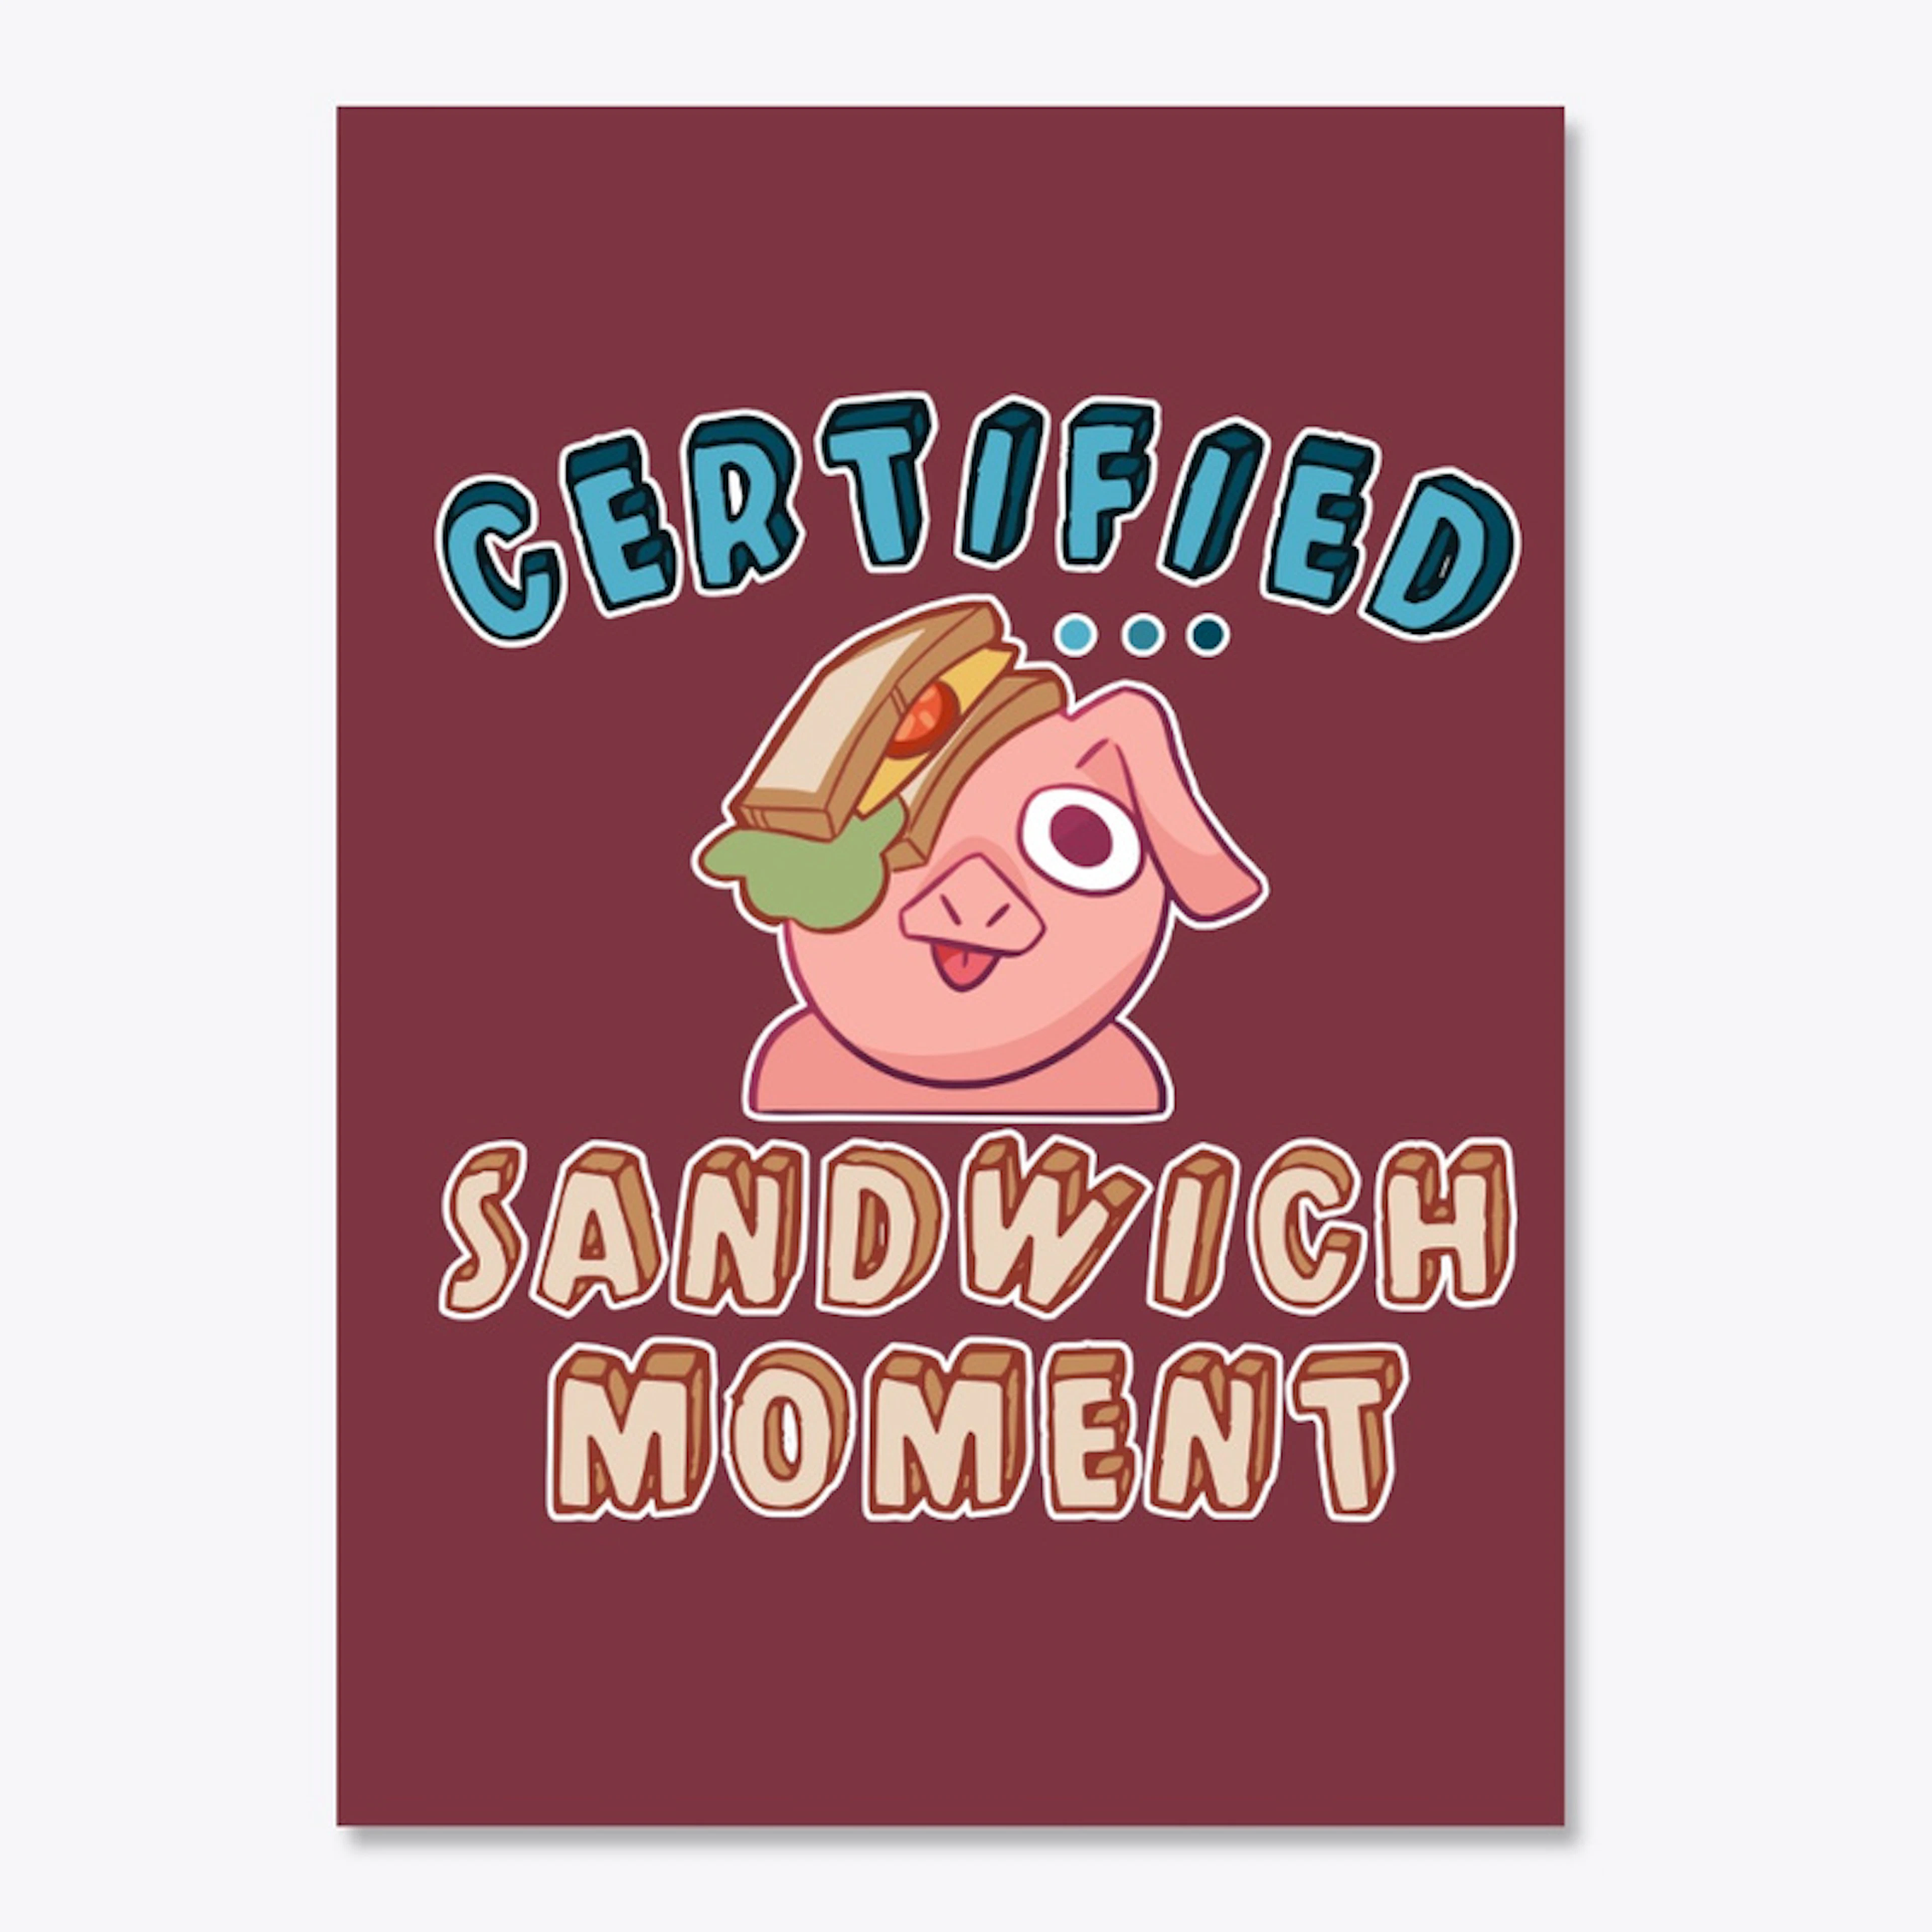 Certified Sandwich Moment